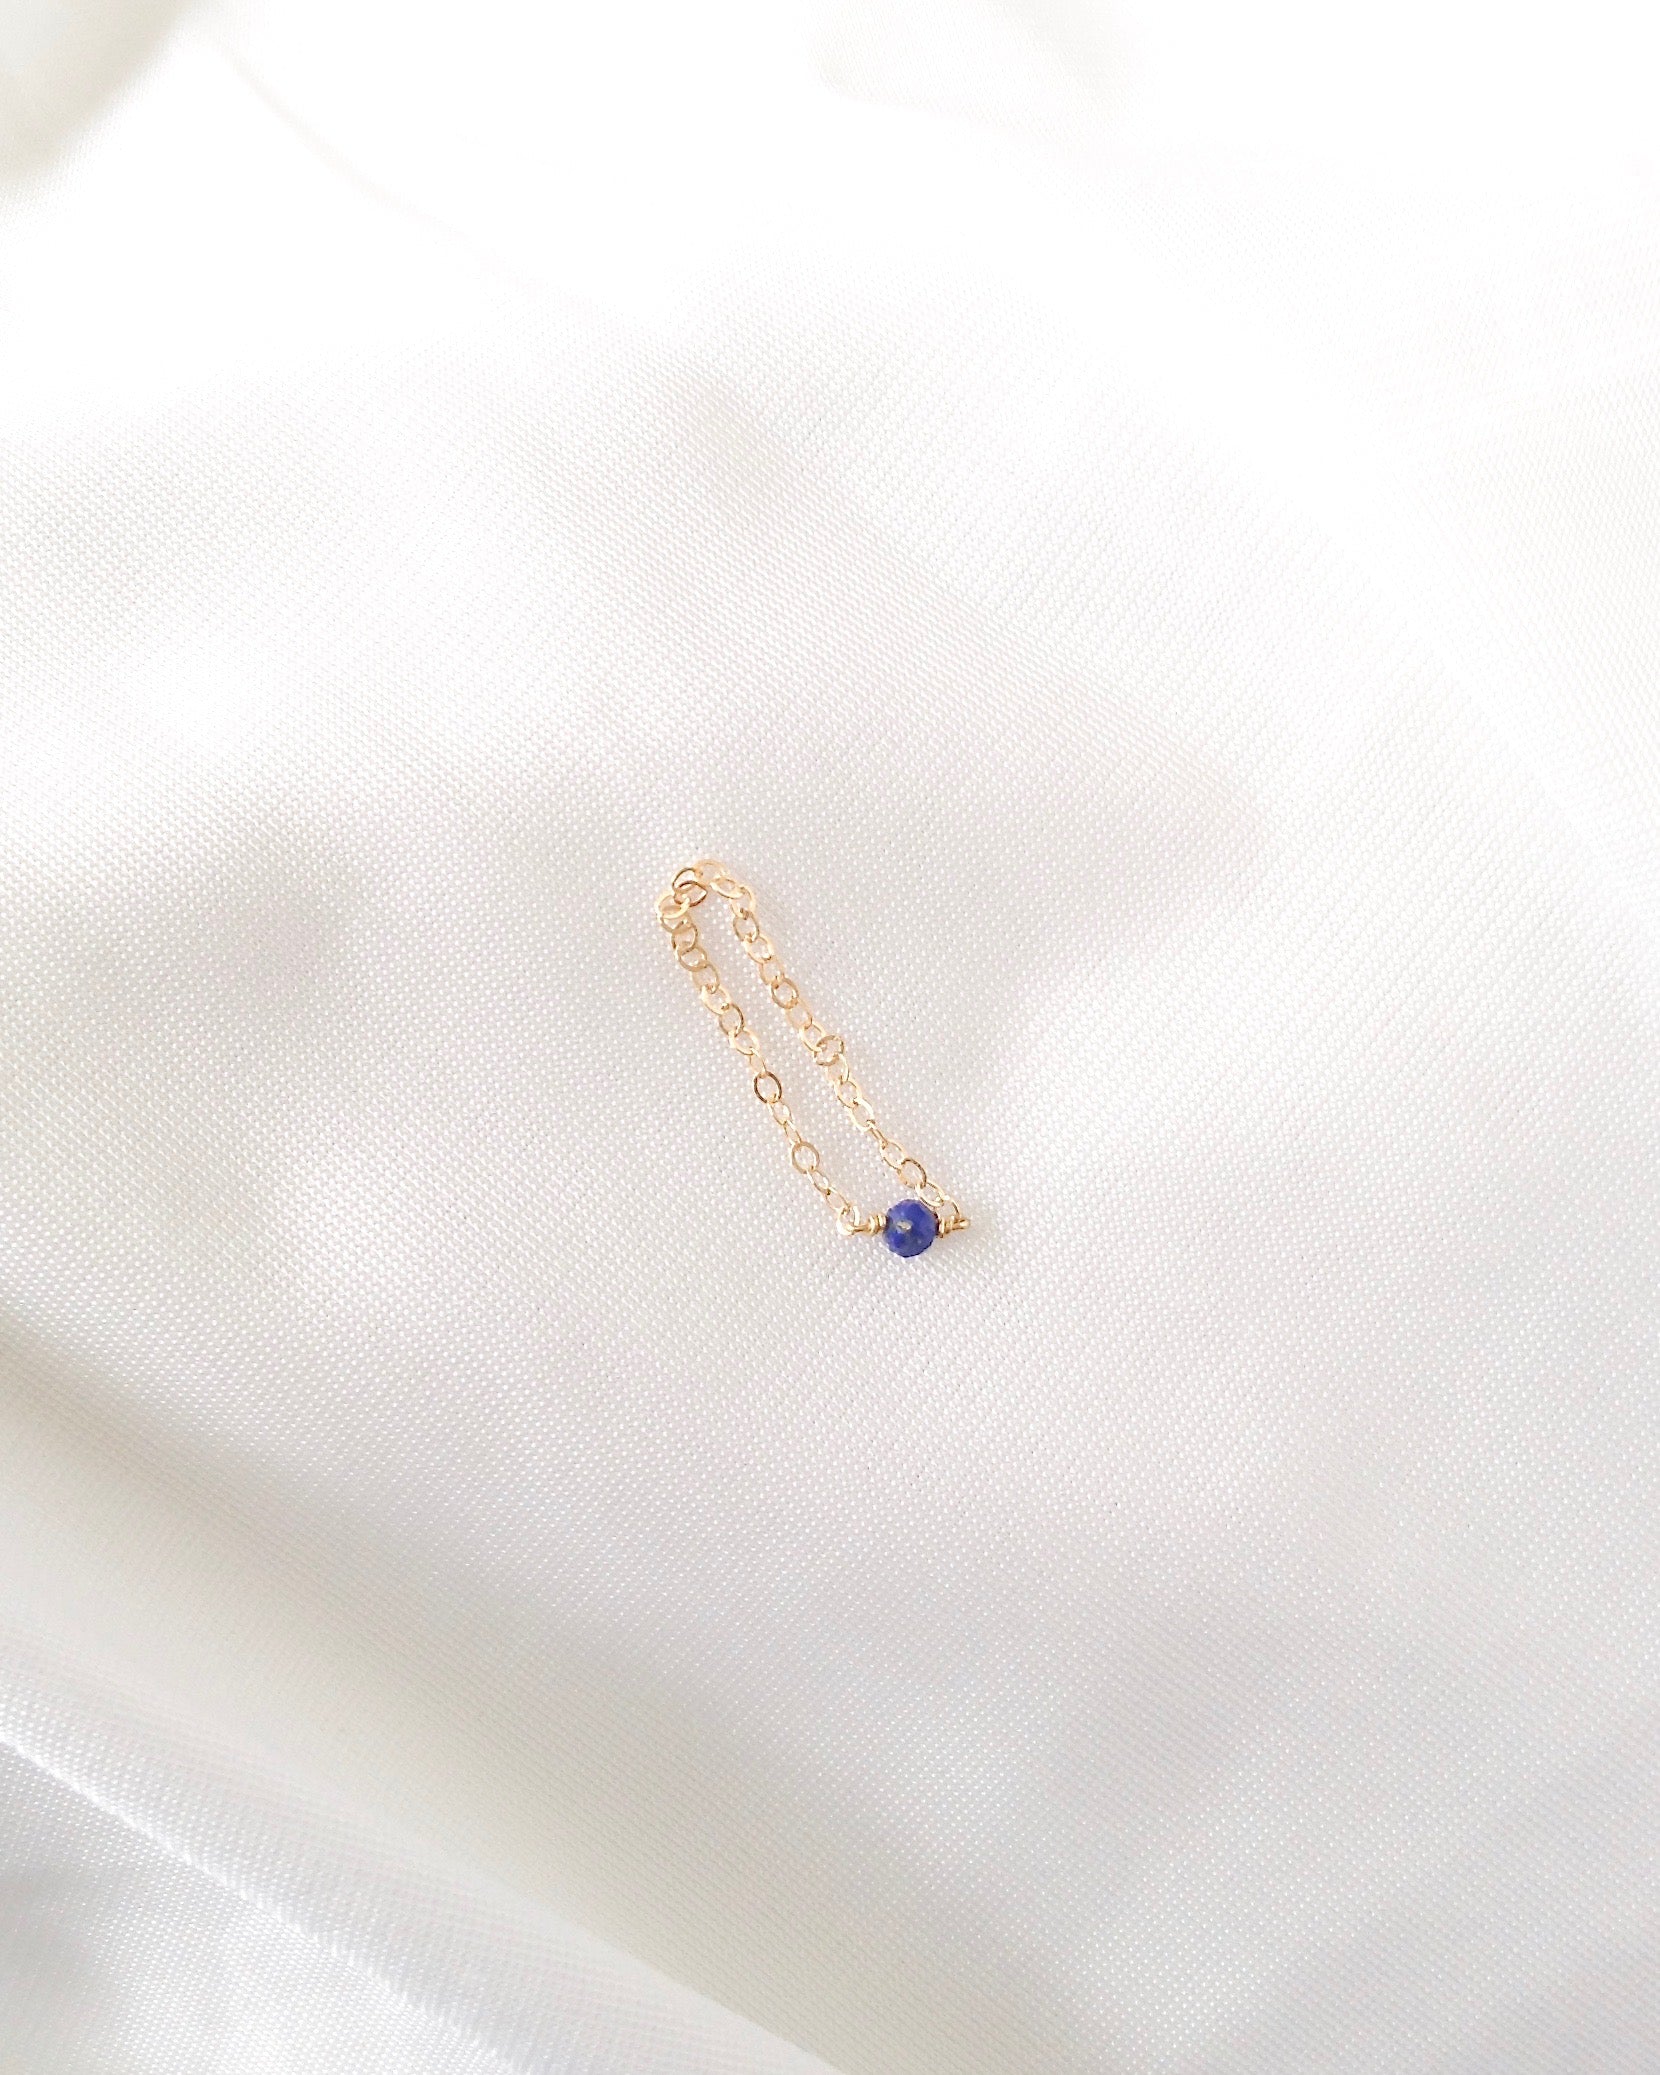 Simple Lapis Lazuli Dainty Everyday Ring | Delicate Gemstone Ring | IB Jewelry